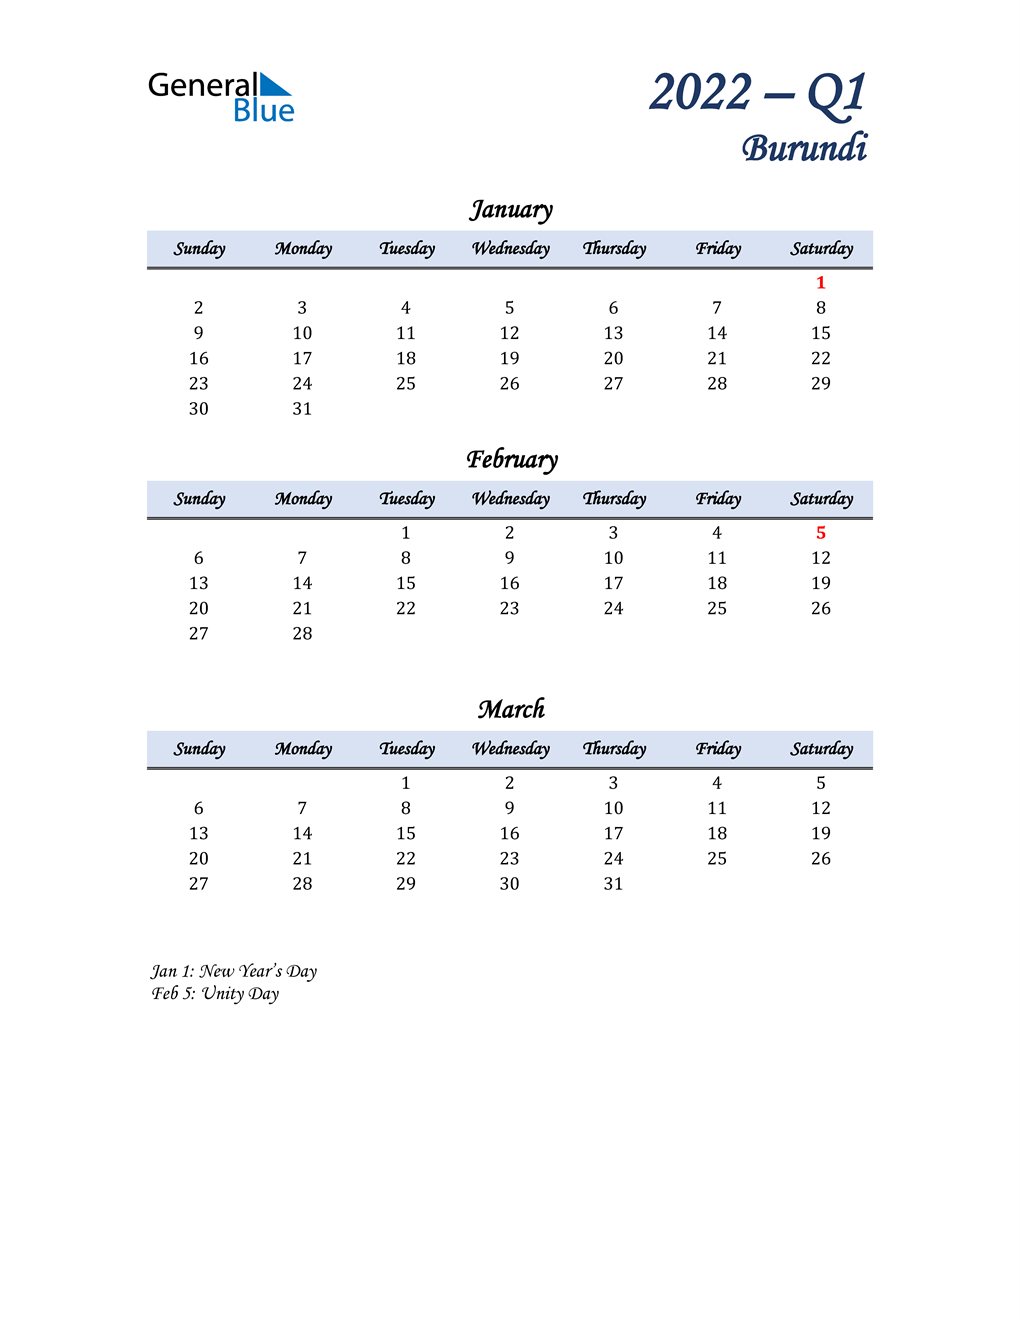  January, February, and March Calendar for Burundi